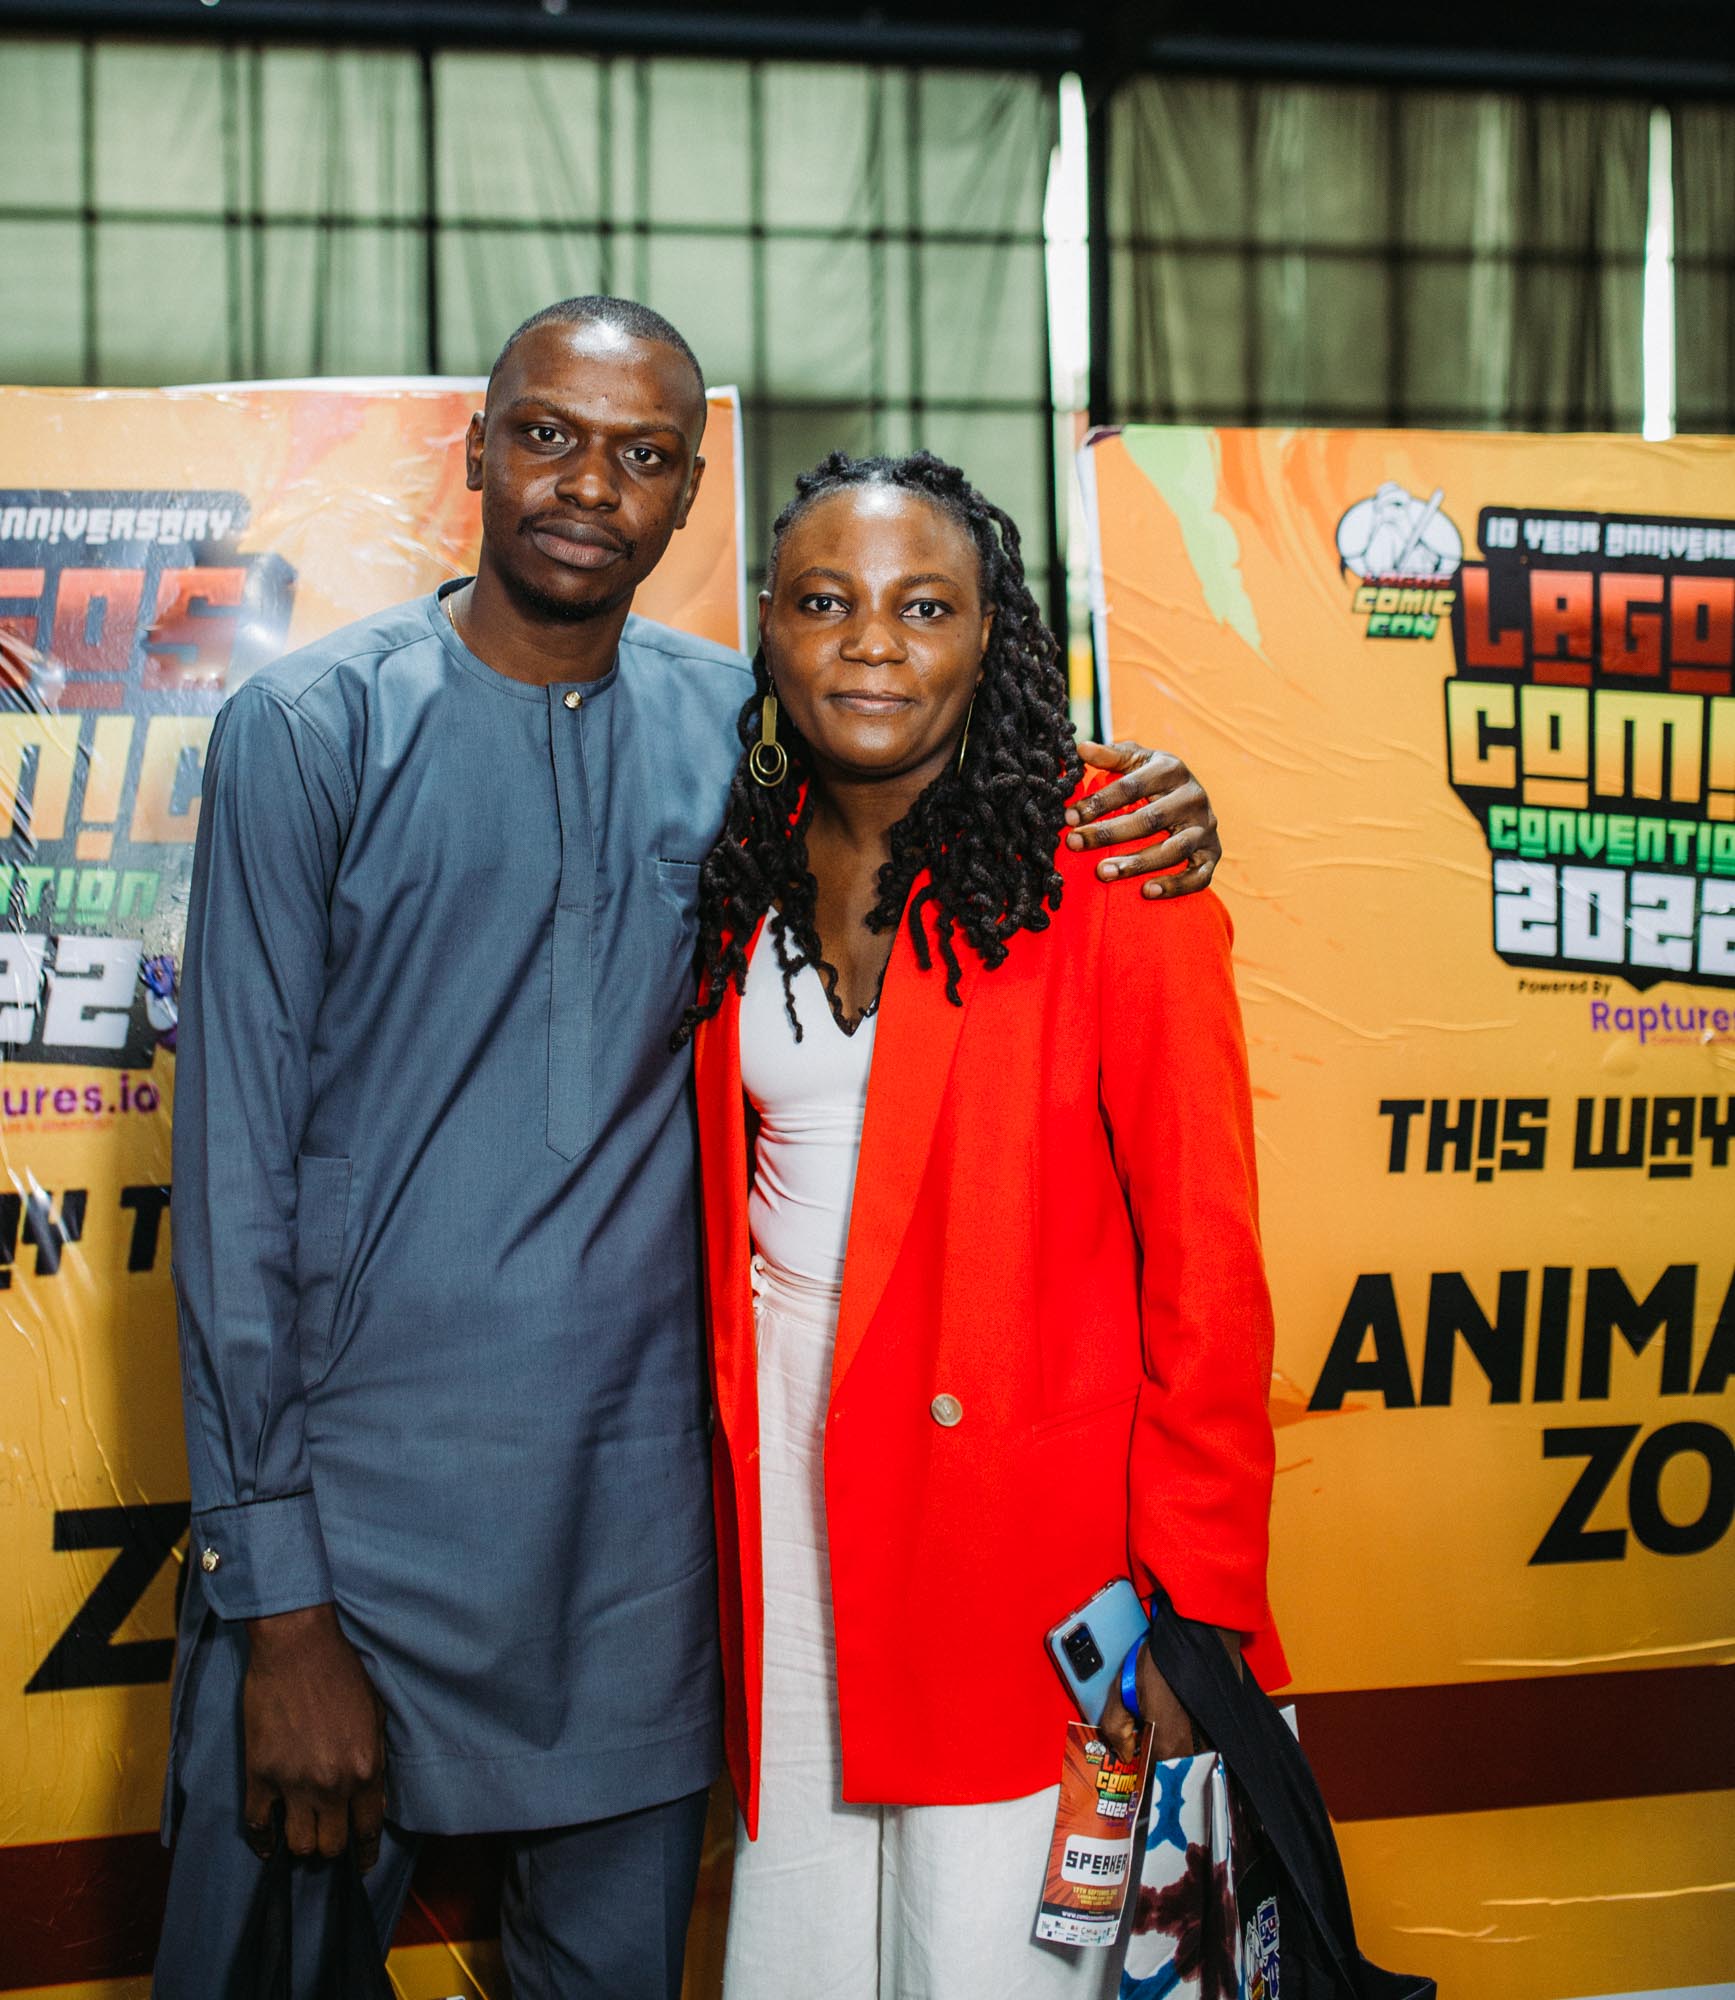 ema edosio kasala dami orimogunje - Ema Edosio and Damilola Orimogunje: Lagos Comic Con Panel Session - 7 Key Takeaways